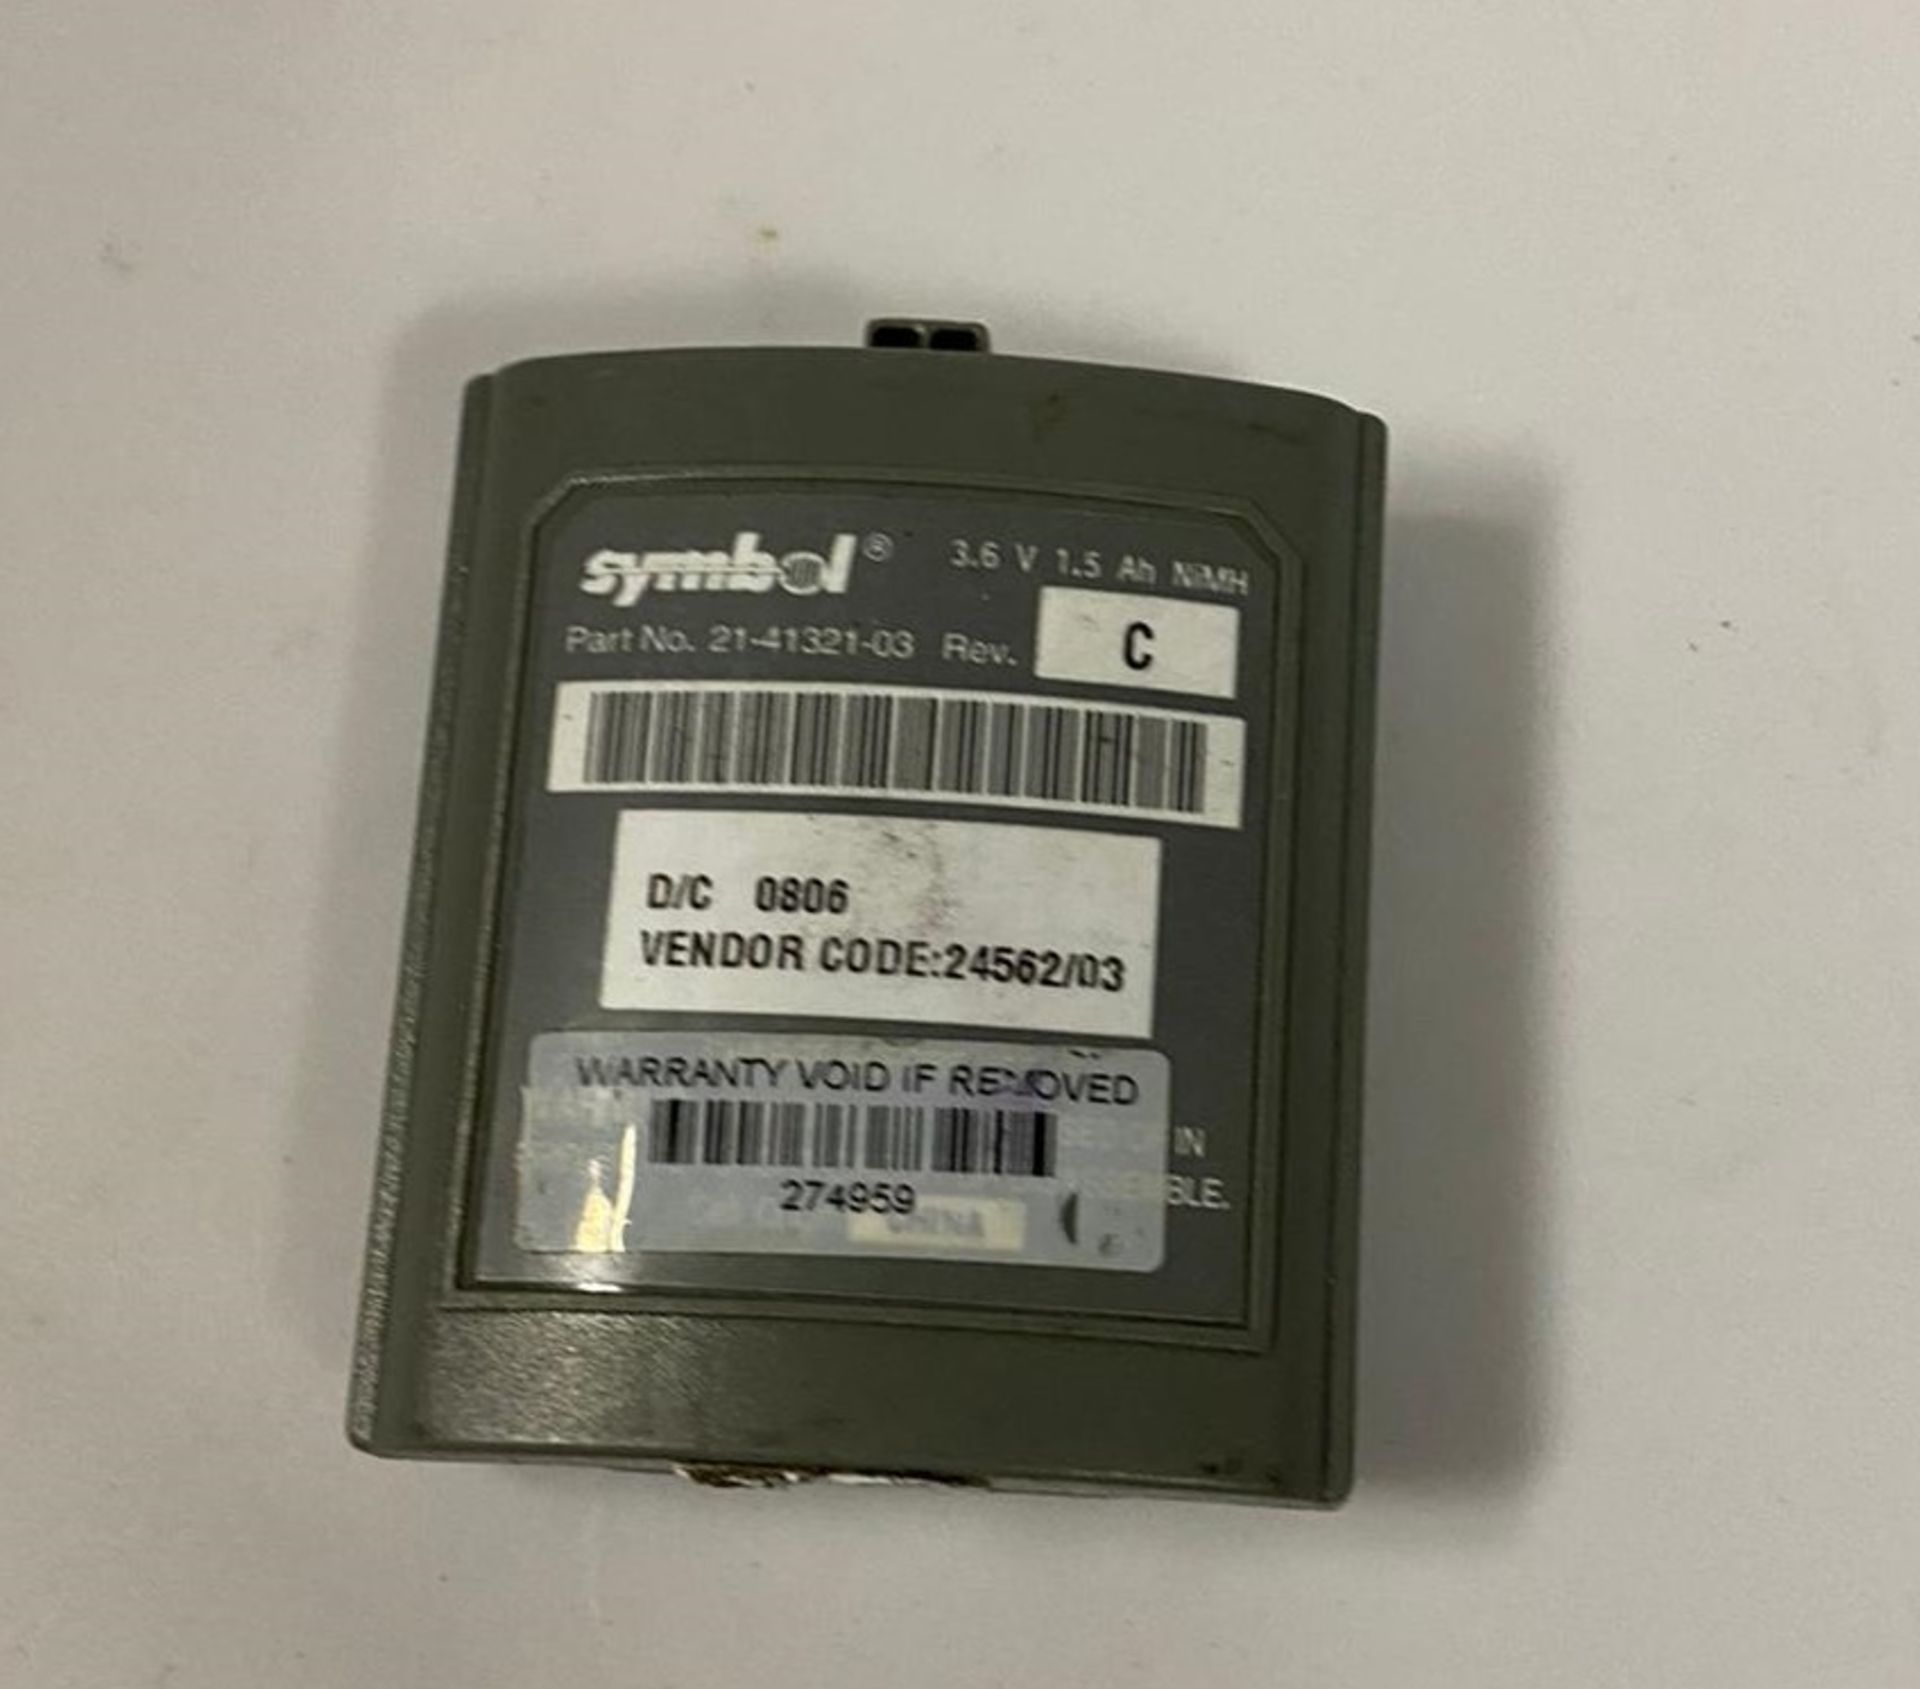 5 x Symbol Battery 21-41321-03 - Used Condition - Location: Altrincham WA14 -